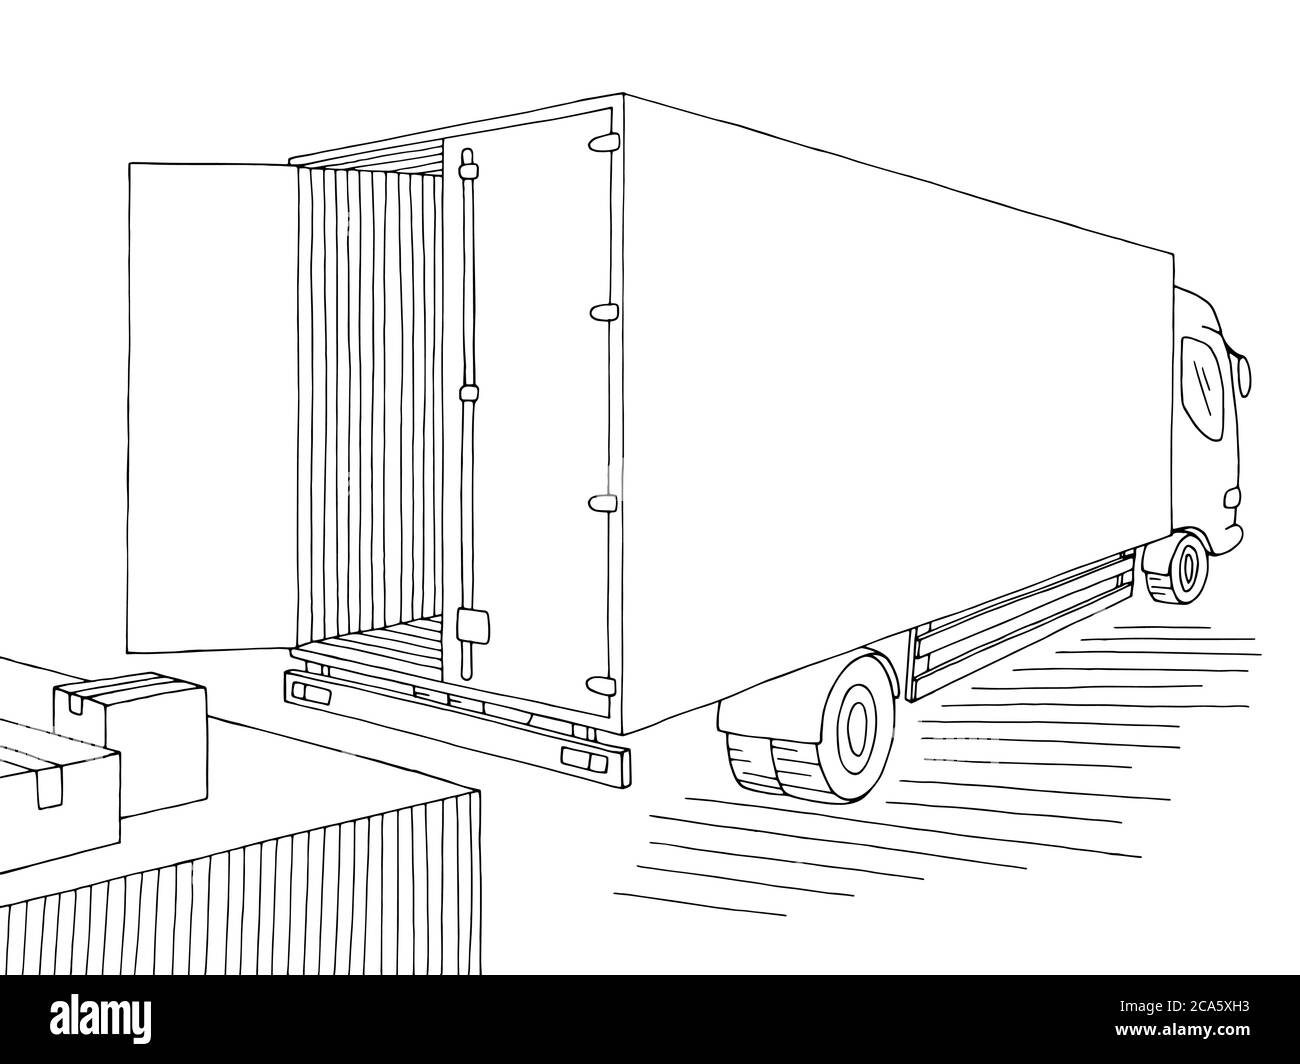 Truck unloading in the stock black white sketch illustration vector Stock Vector